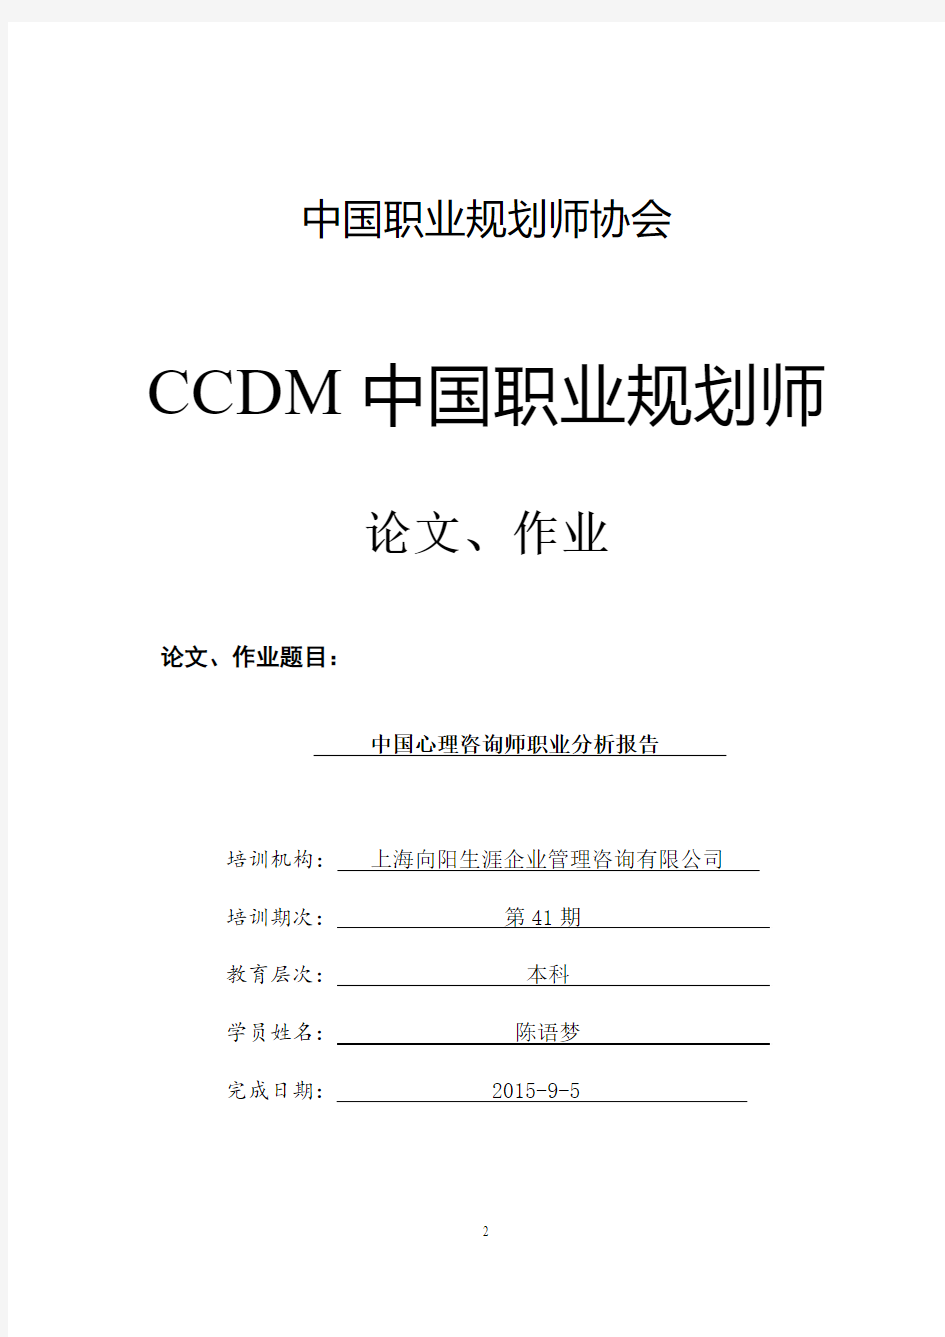 CCDM中国职业规划师培训第41期学员论文